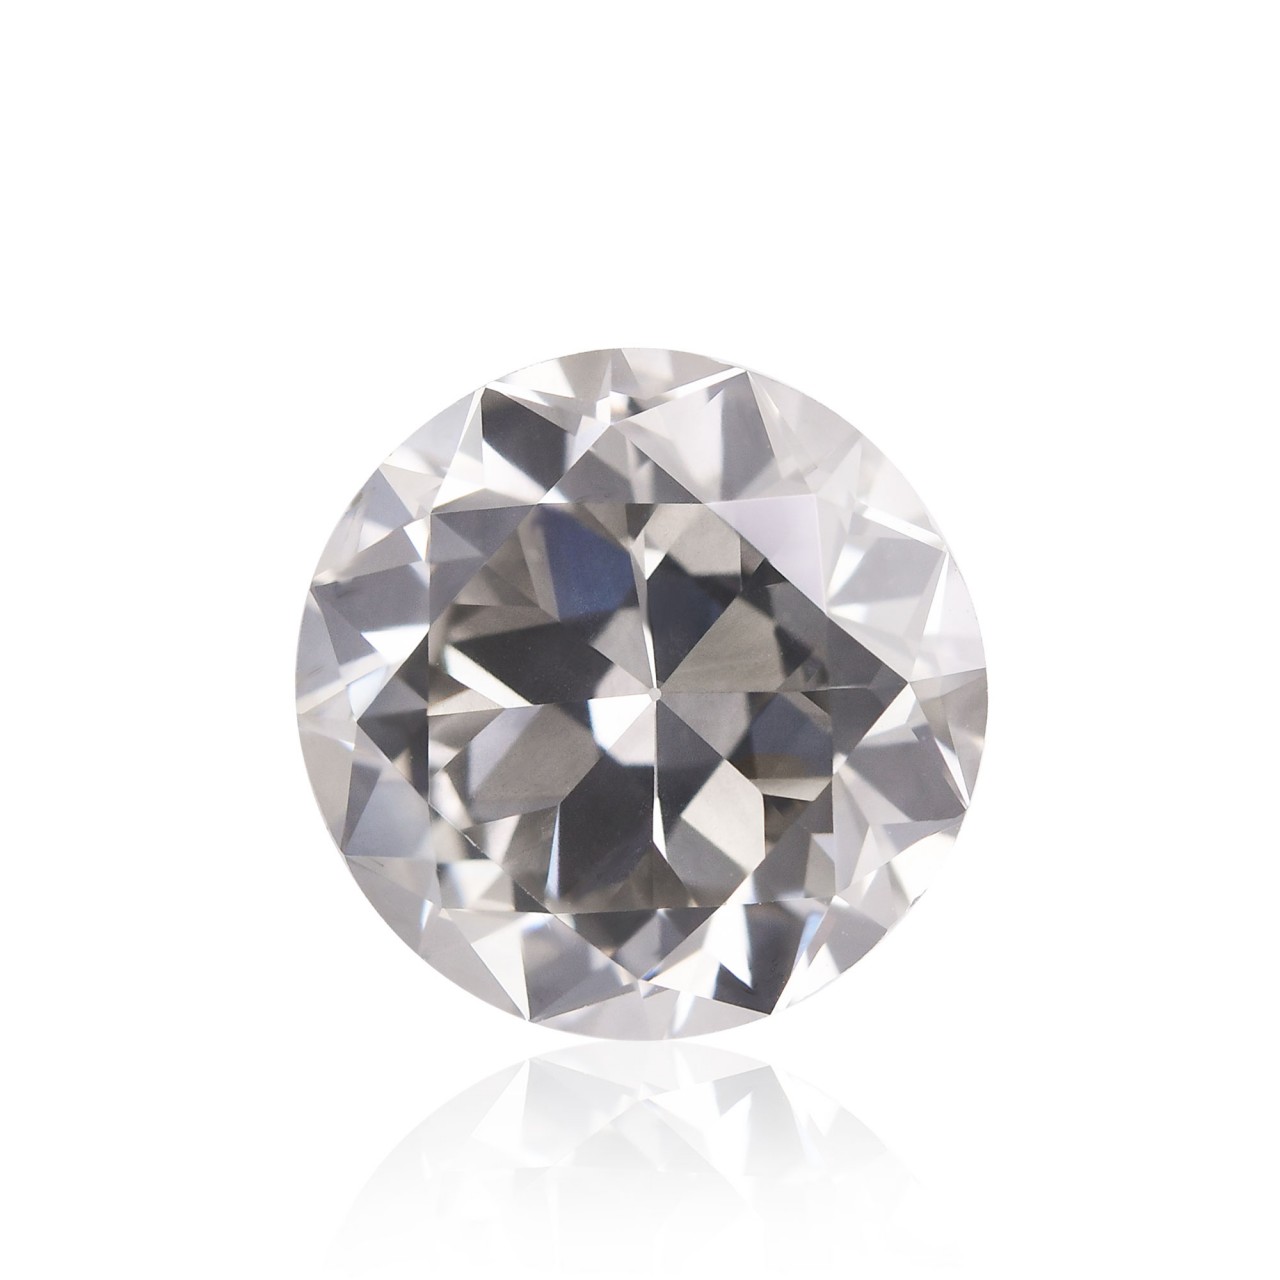 2.10 carat, Fancy Light Gray Diamond, Round Shape, SI2 Clarity ...